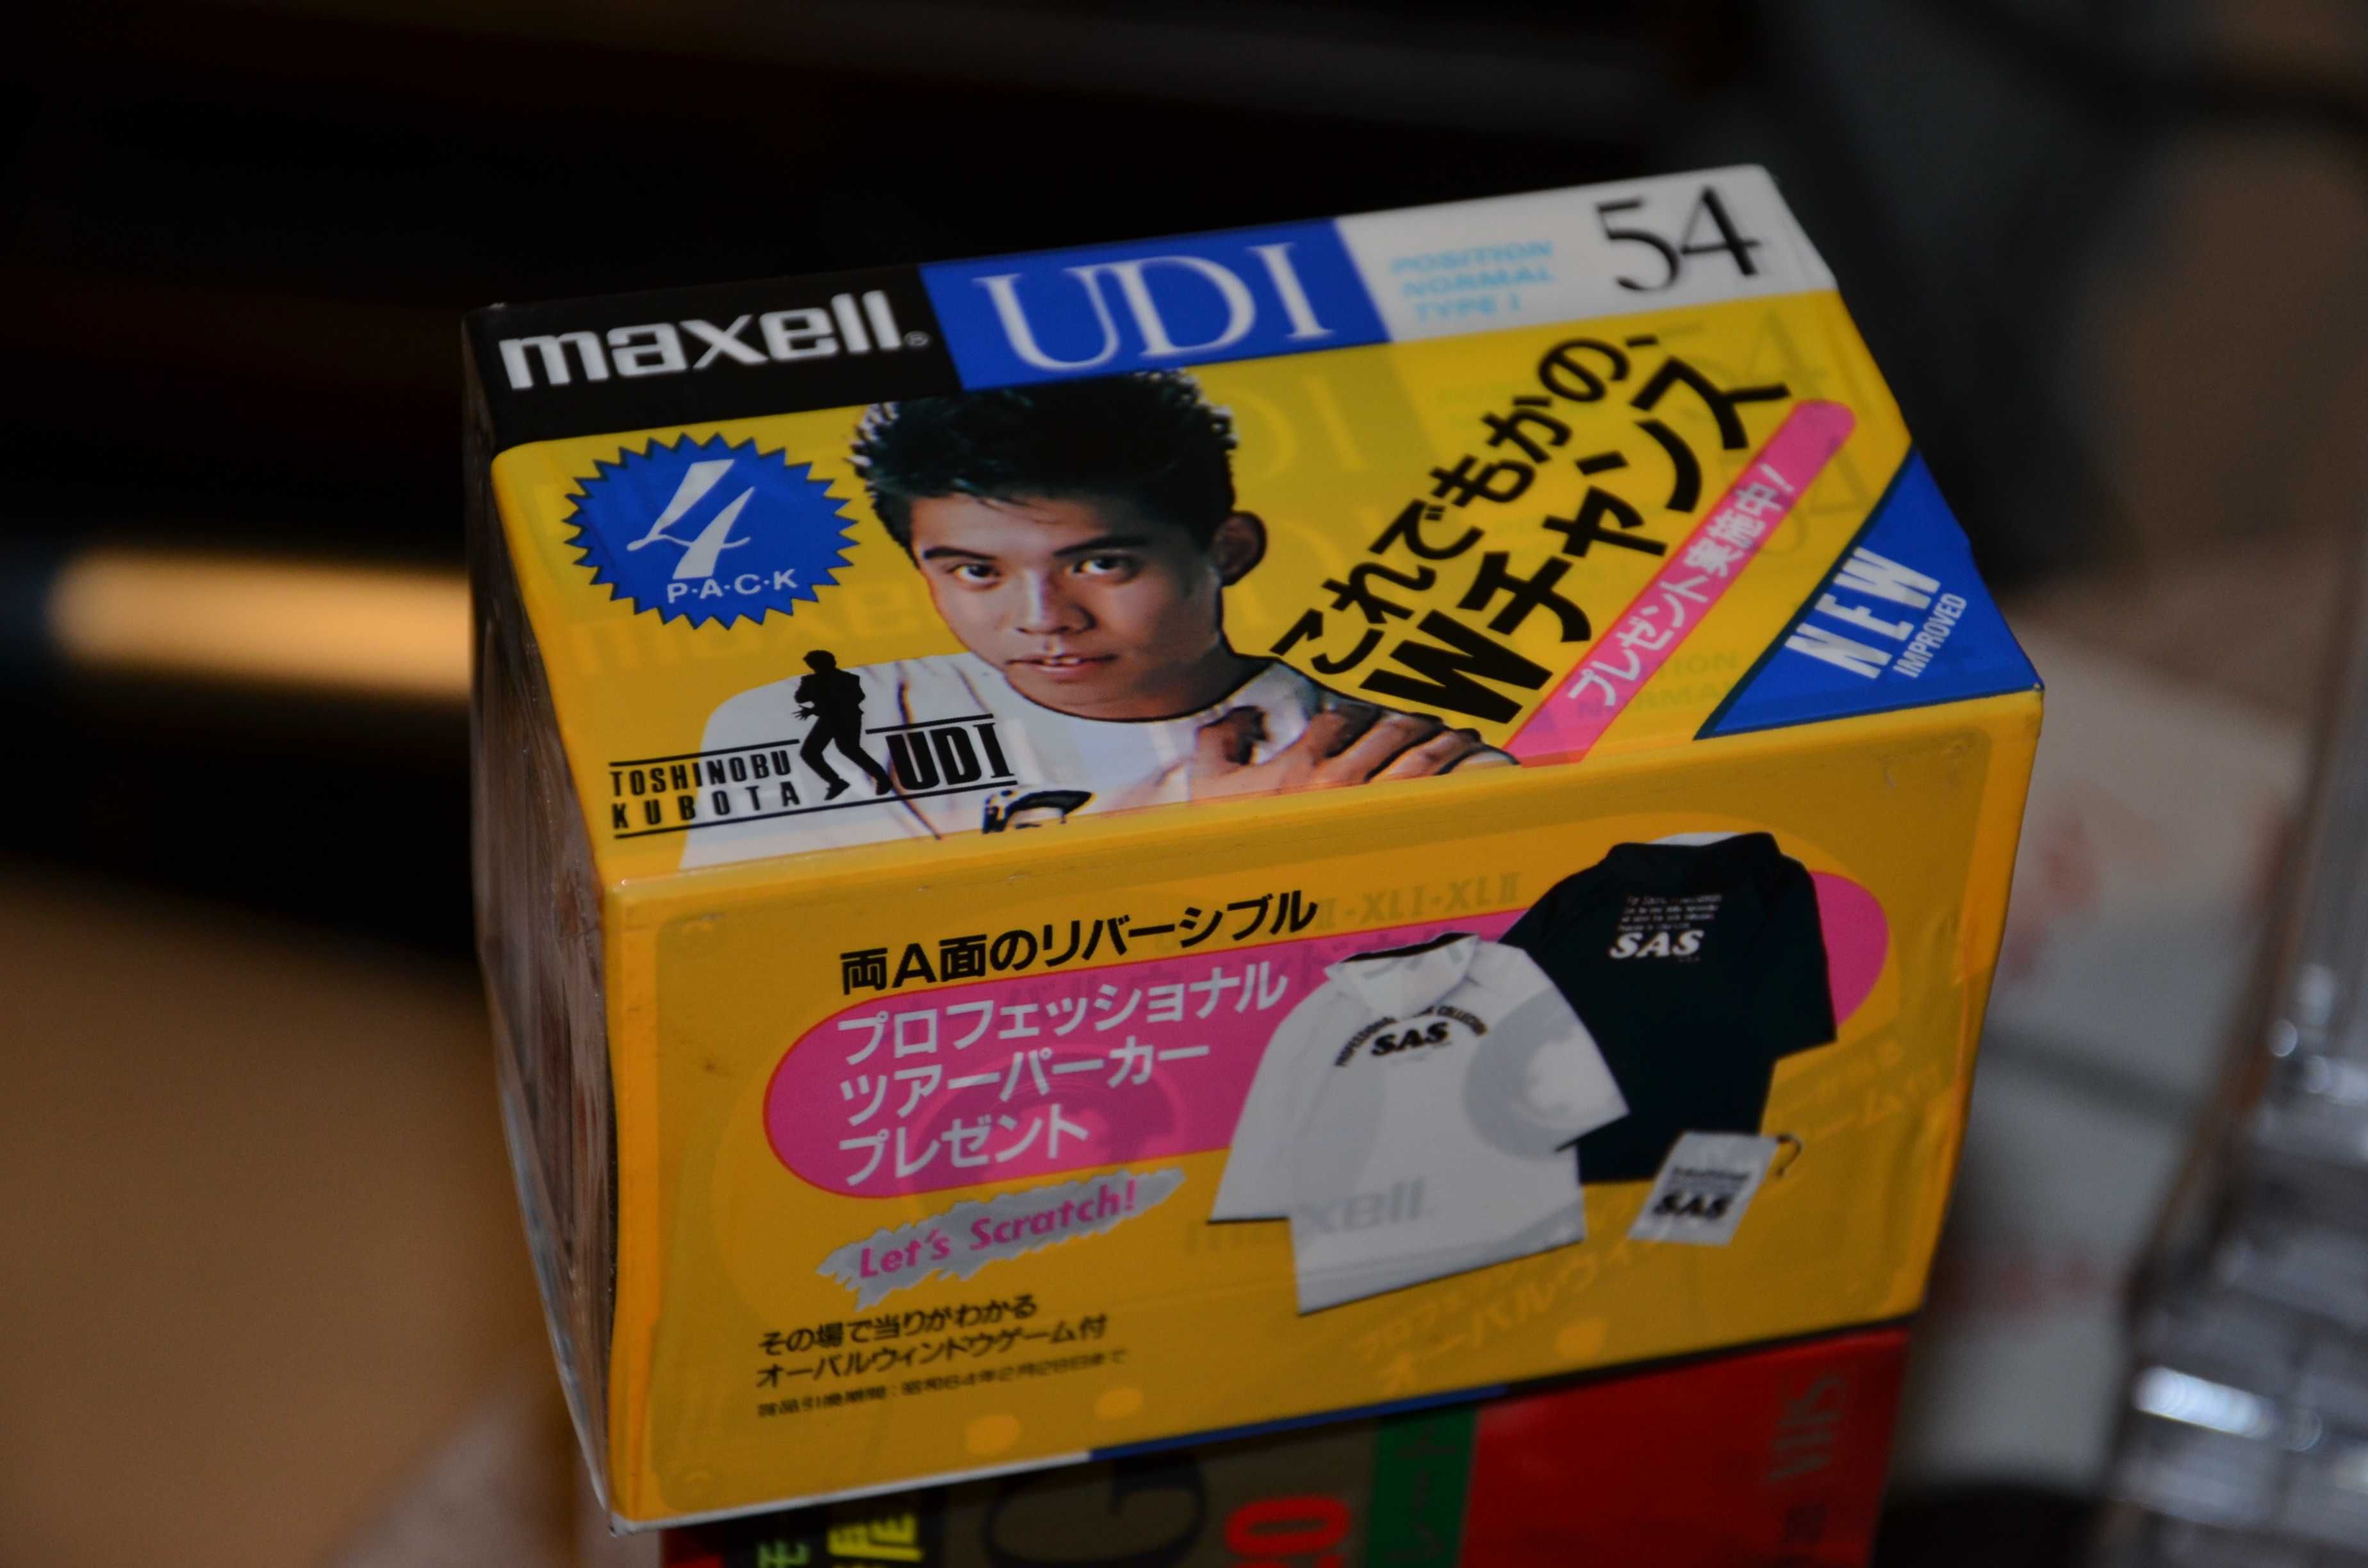 Аудиокассеты Maxell UD I 54 Made in Japan  1988 Идеальн. Сост.